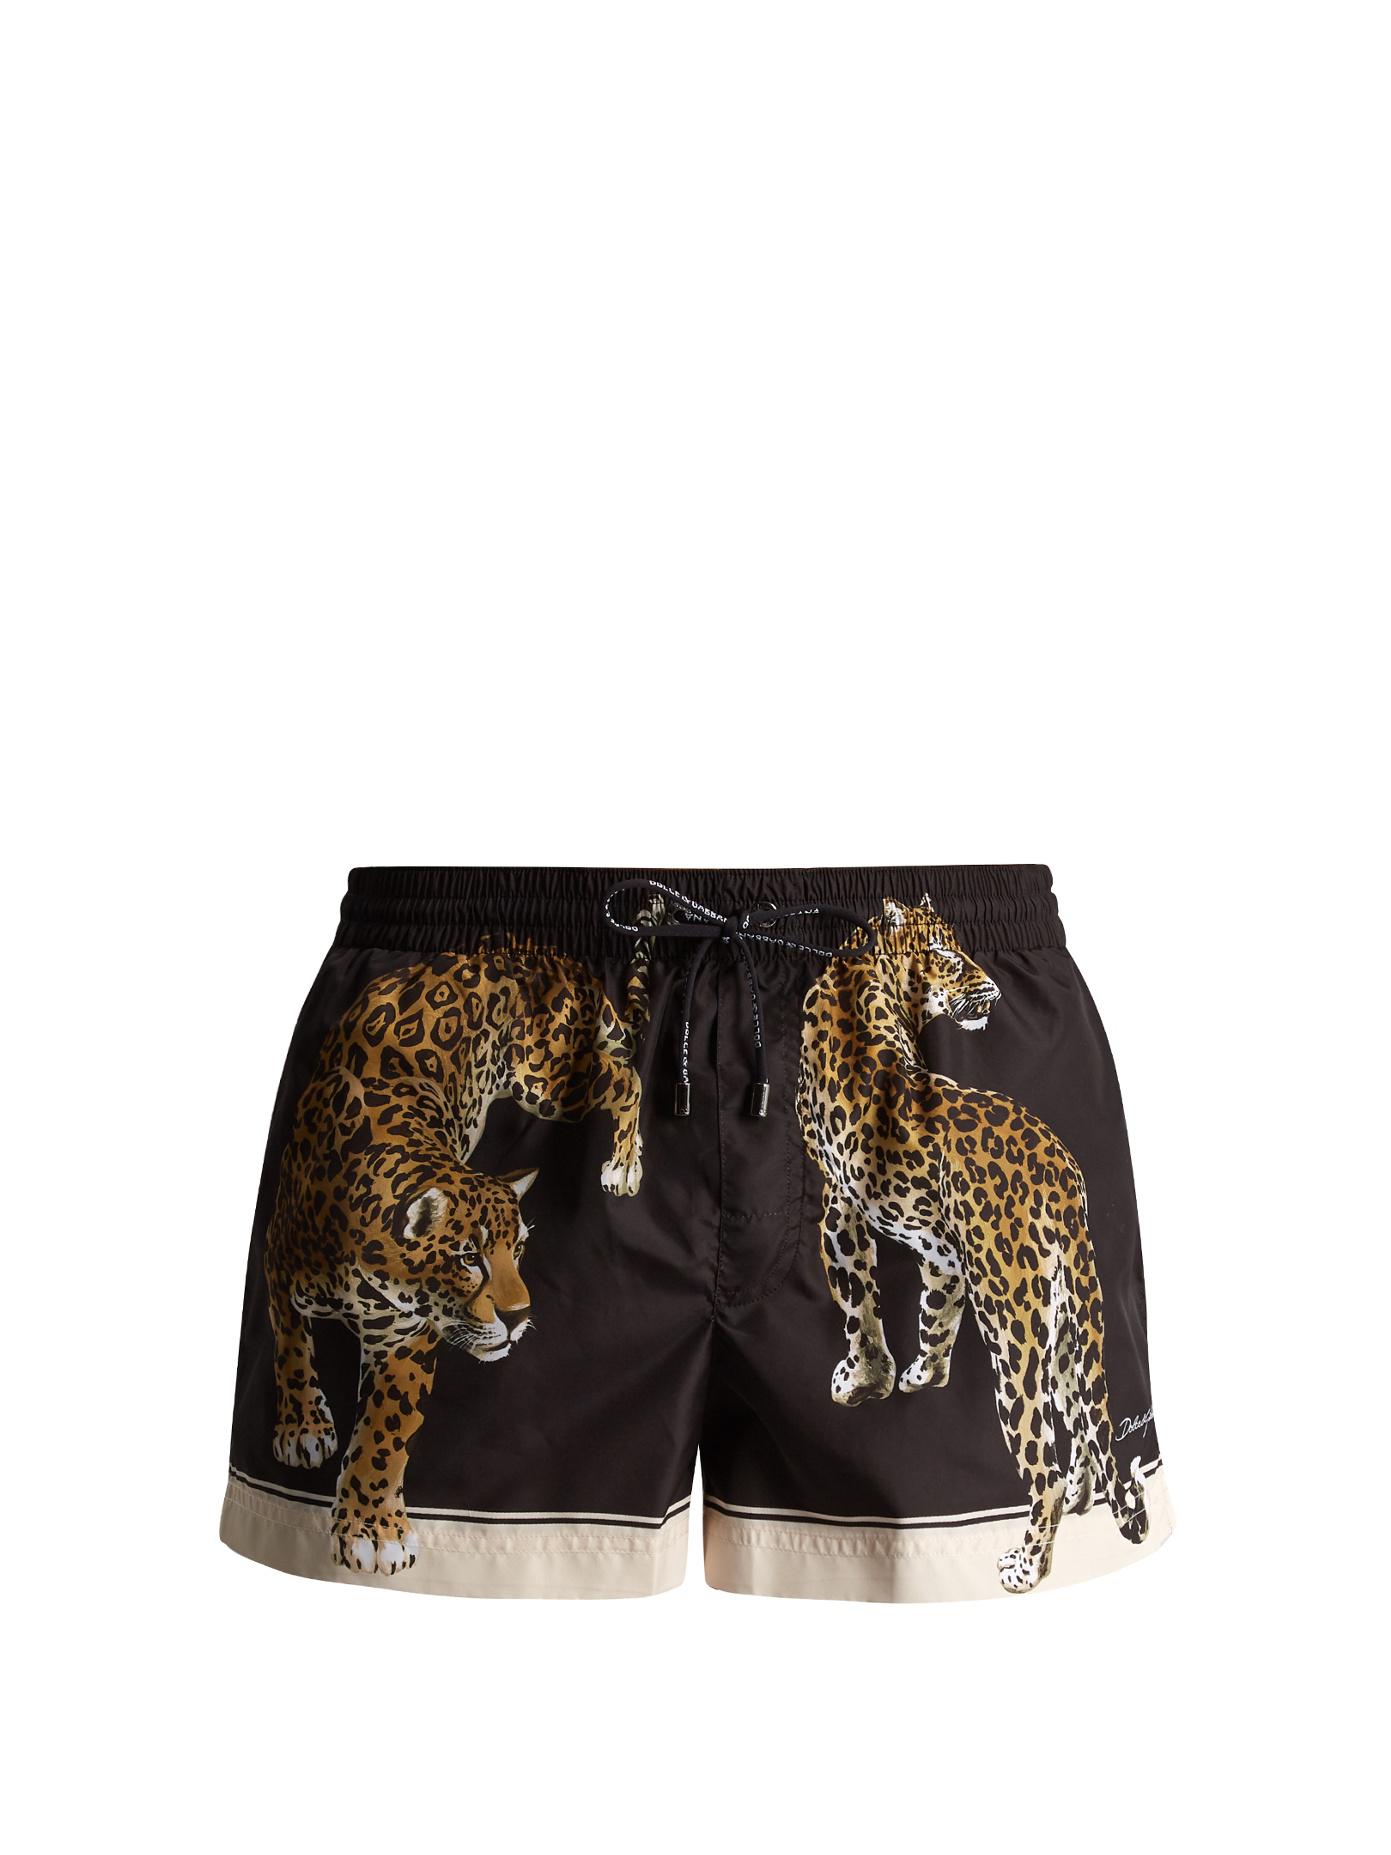 Dolce & Gabbana Synthetic Short Swim Trunks With Leopard Print for Men Mens Clothing Beachwear 